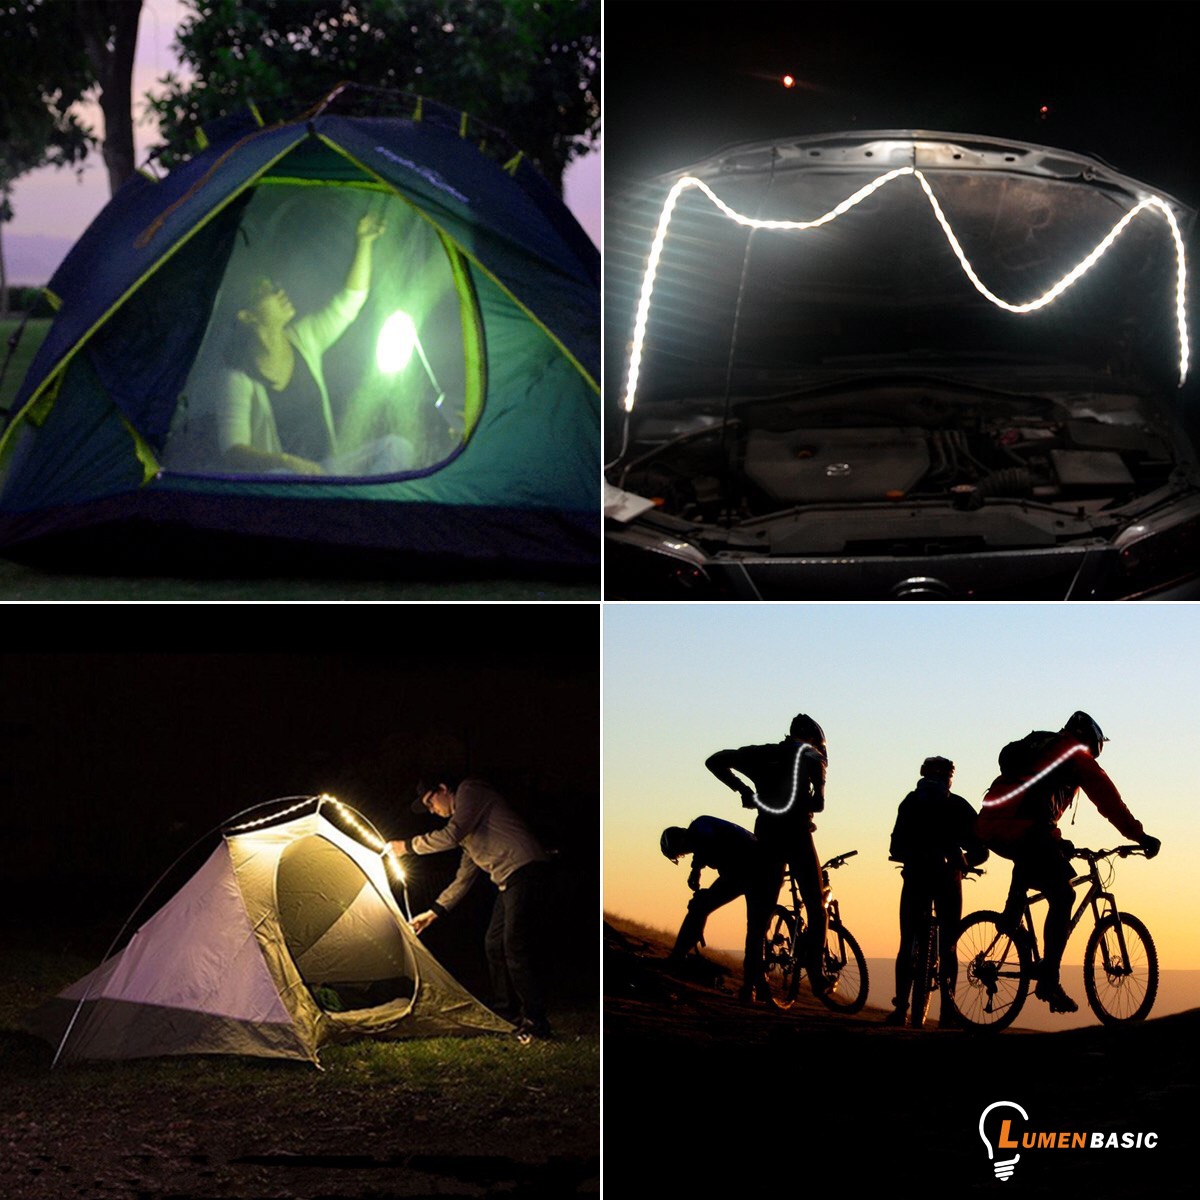 Camping & Touring LED Strip Lights